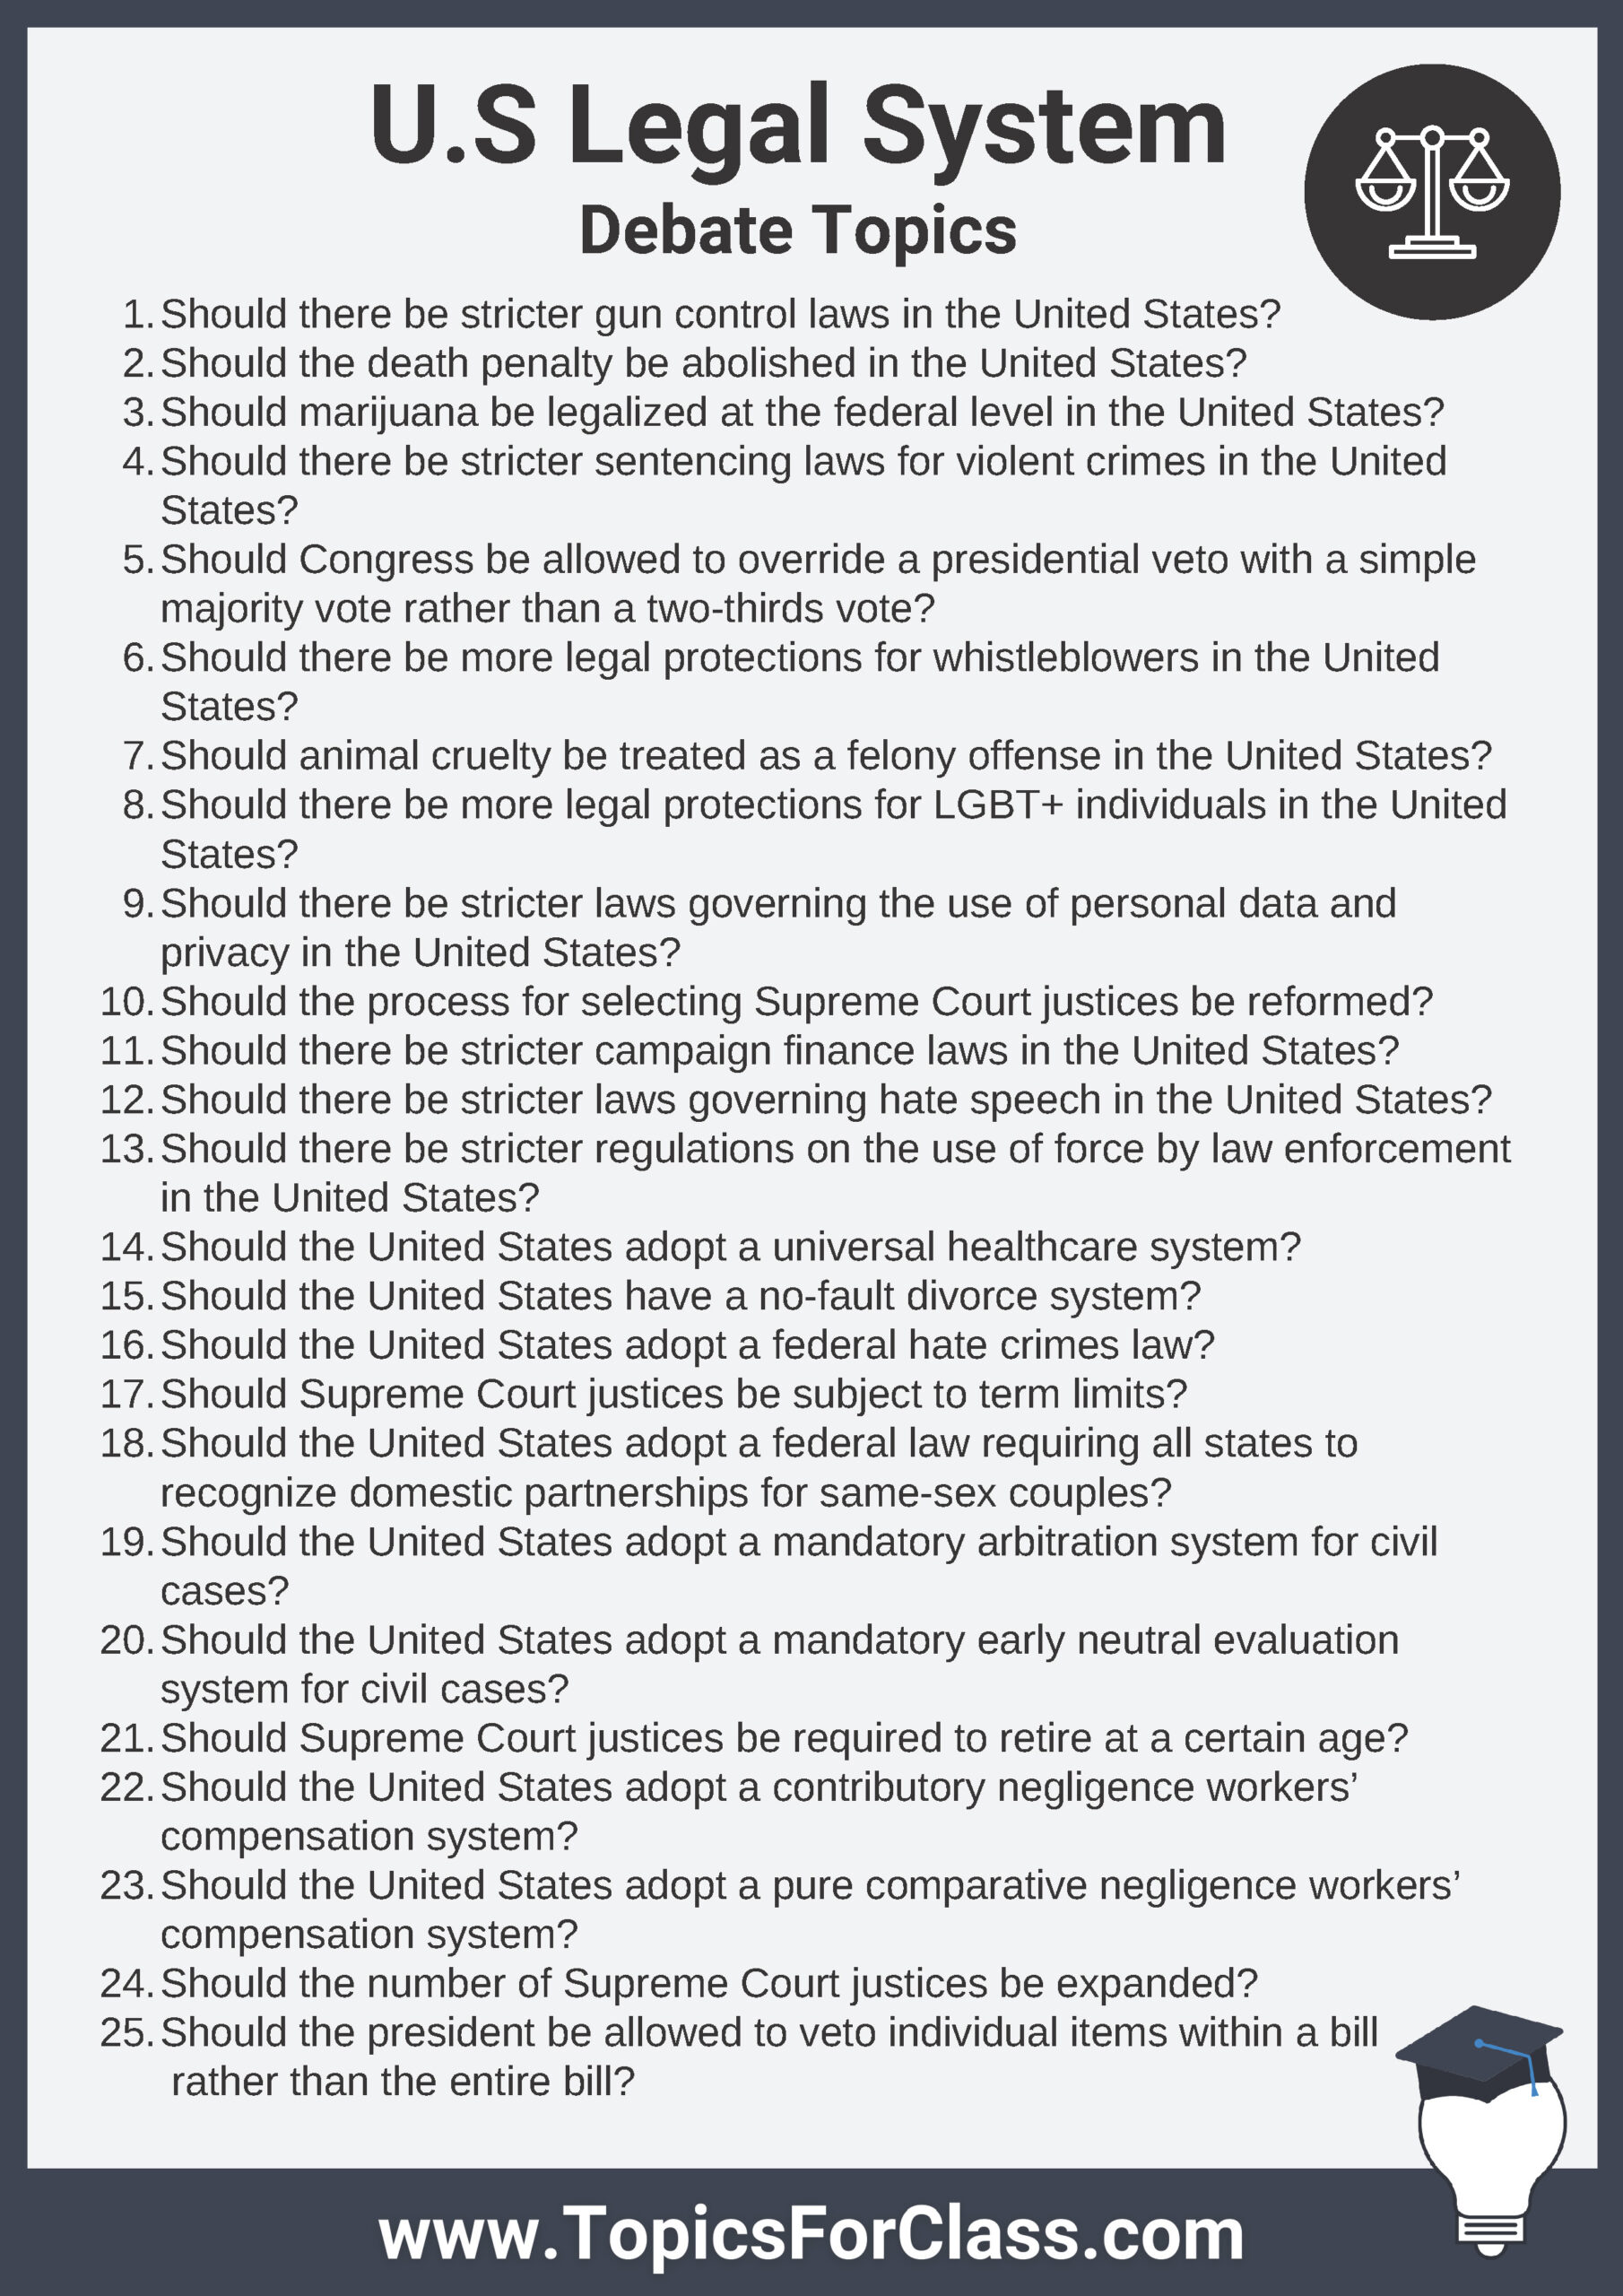 Debate Topics About U.S Legal System PDF